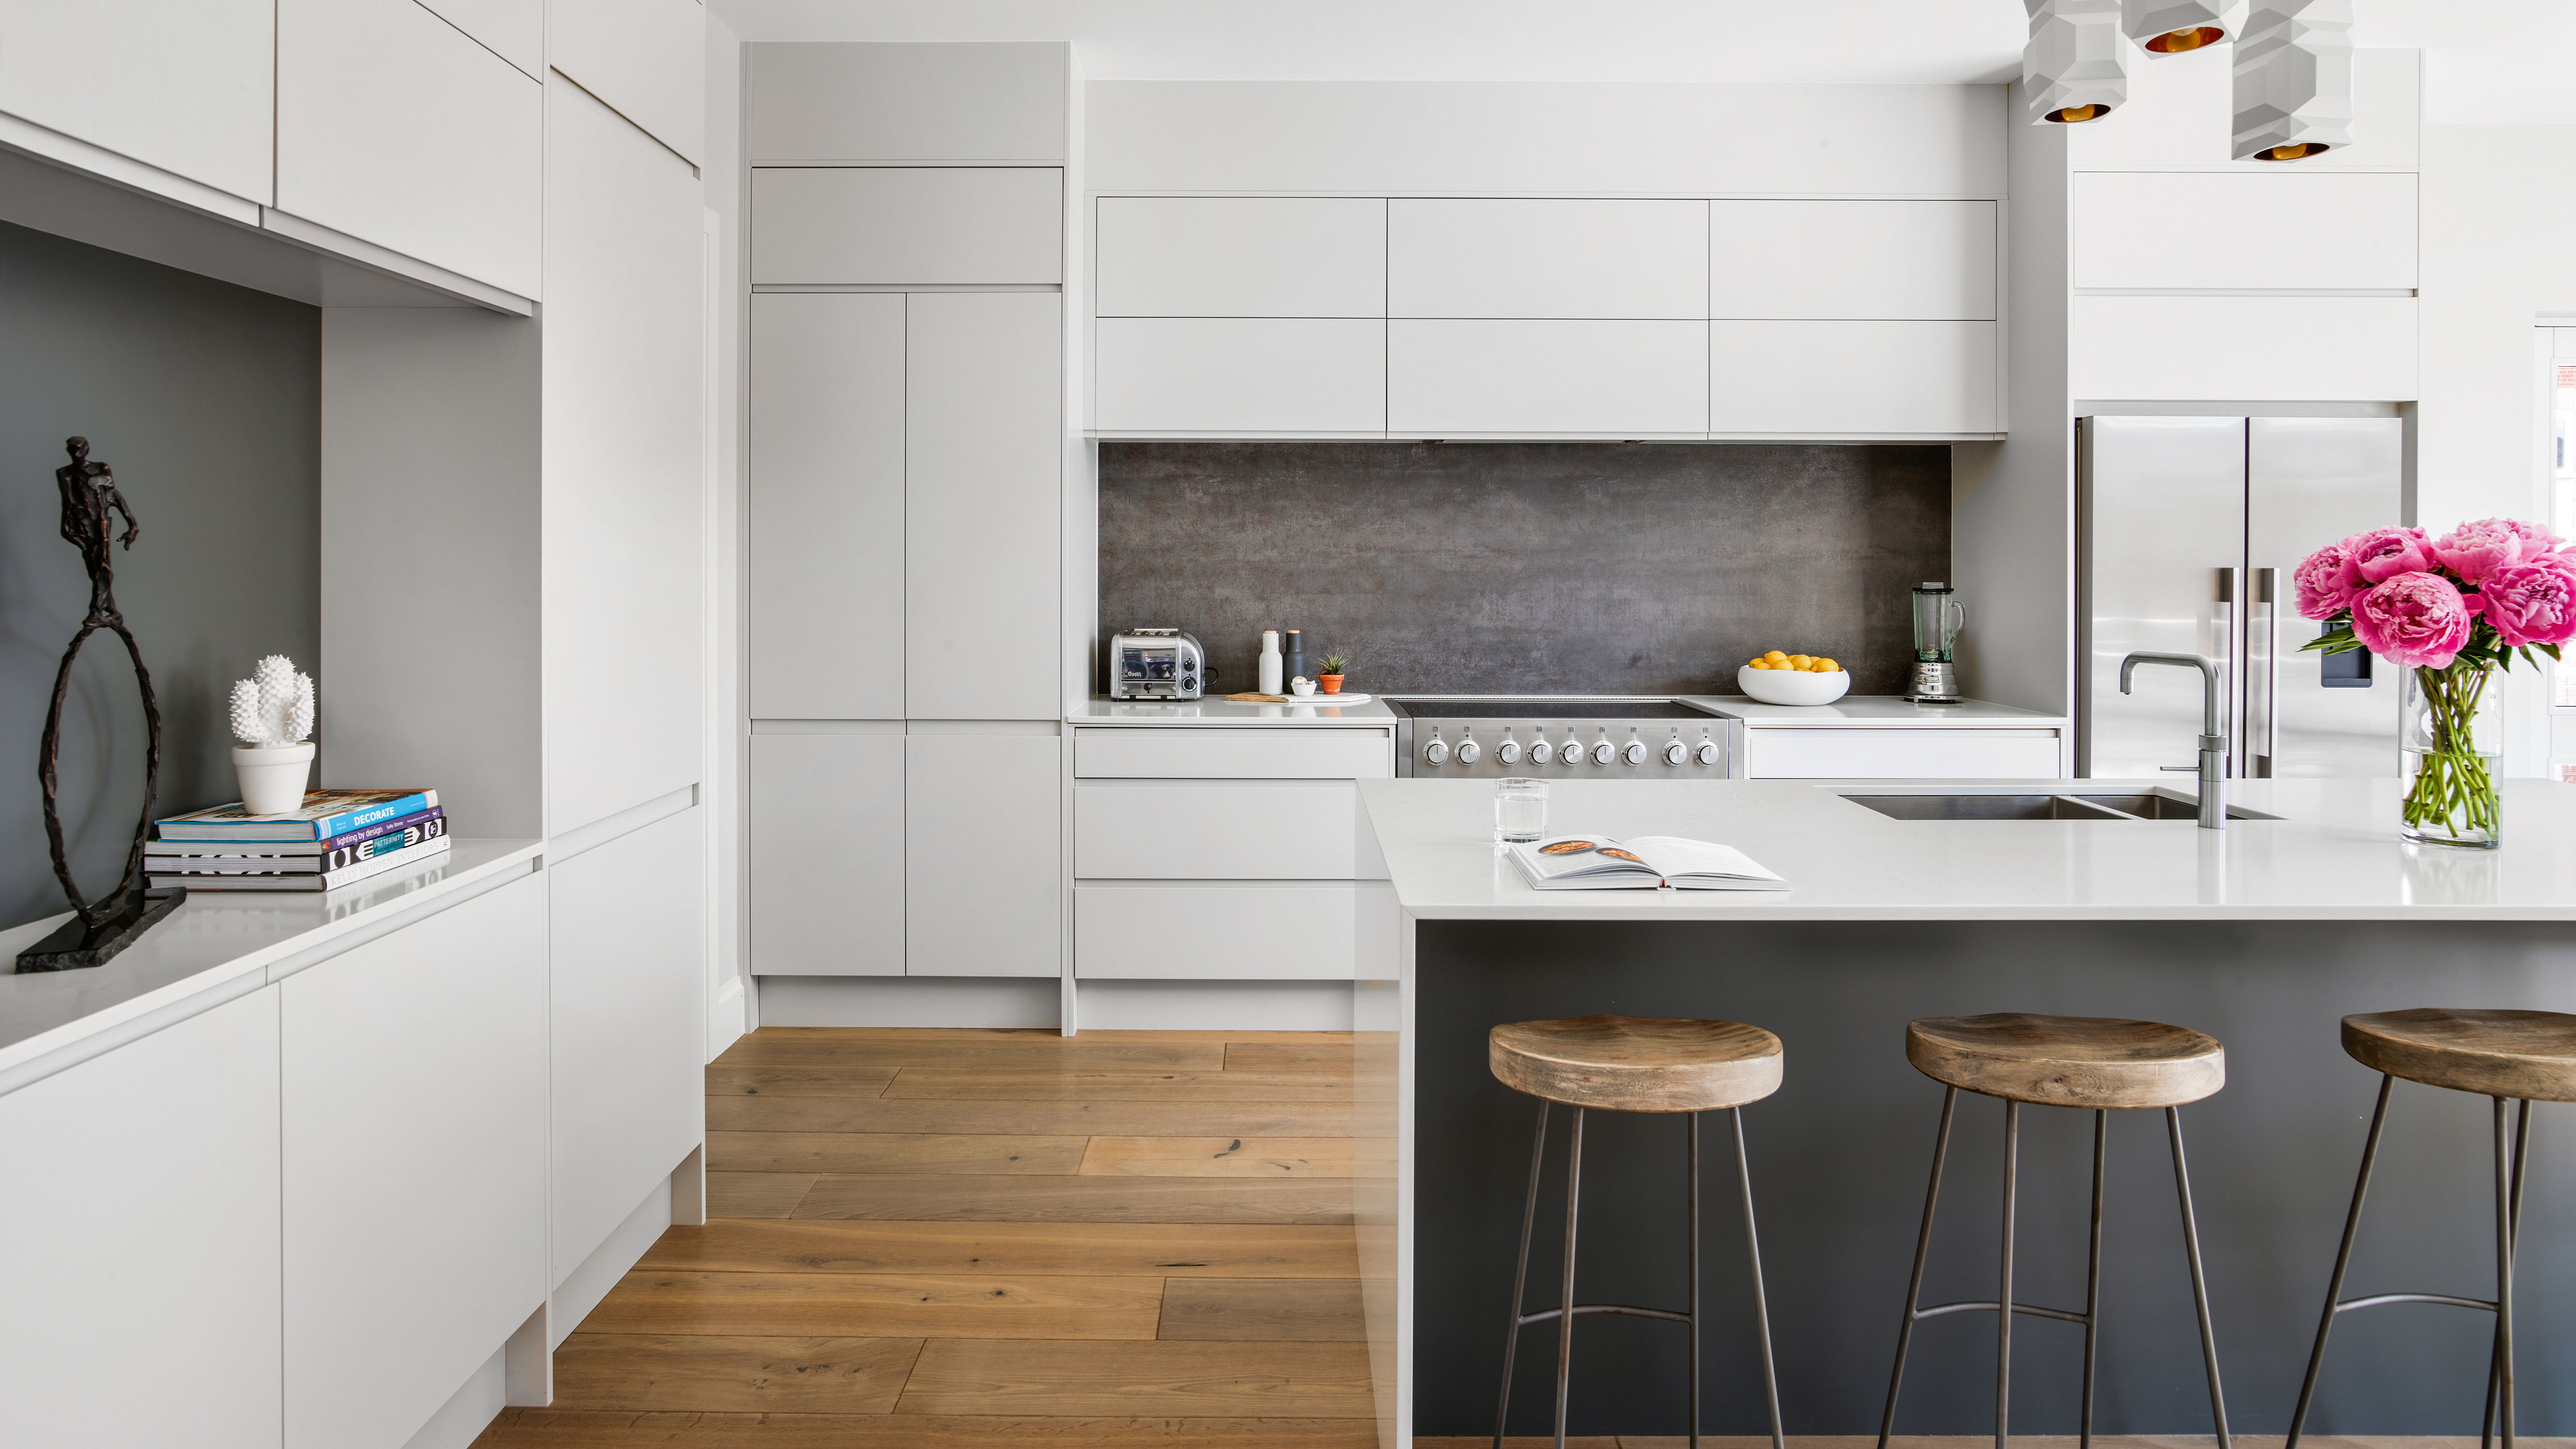 Minimalist kitchen ideas 20 simple schemes for the modern home ...